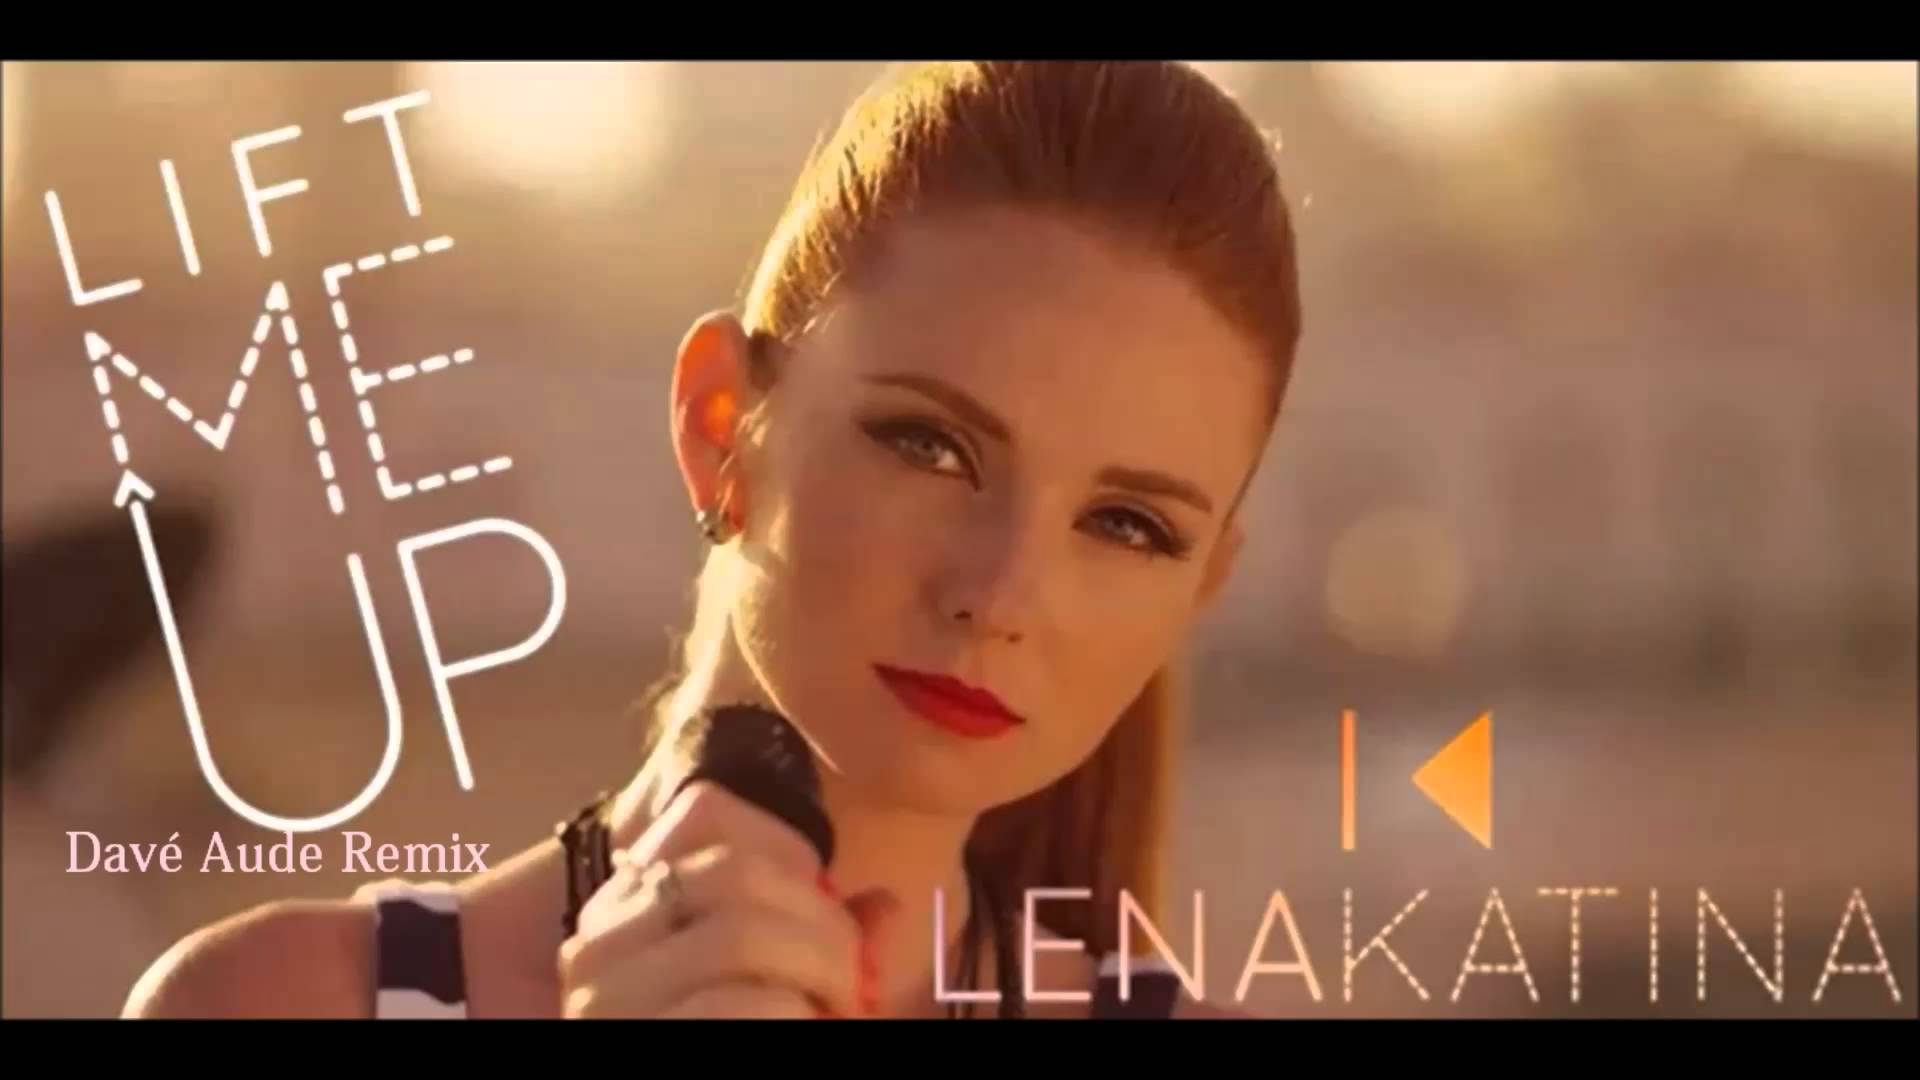 Lena Katina t.A.T.u. - Lift Me Up Dave Aud Remix - YouTube